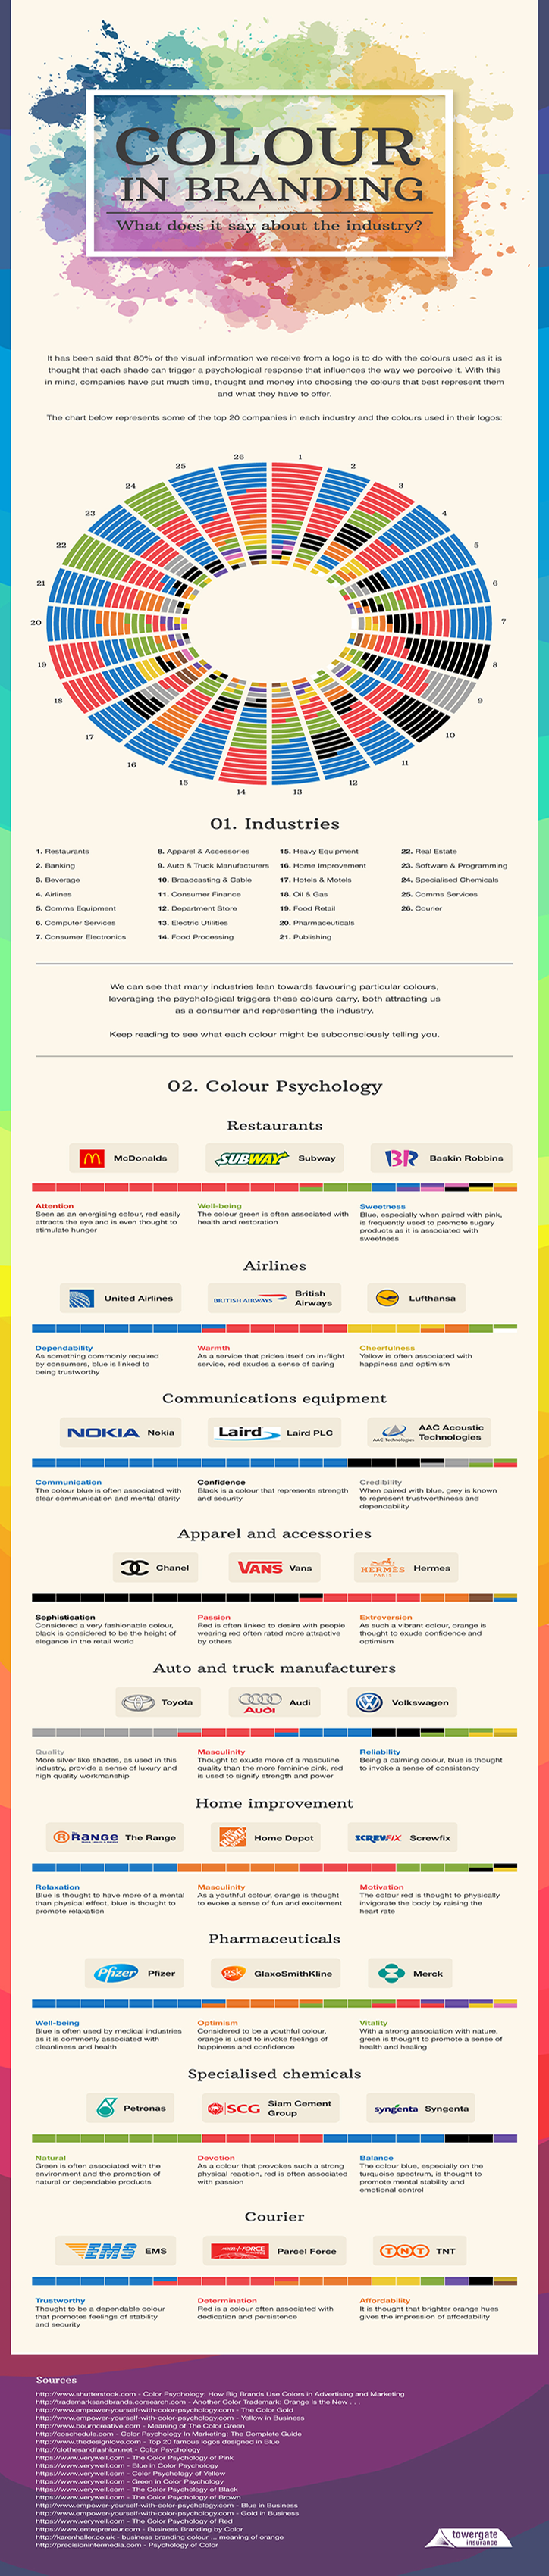 renk-psikolojisi-infografik